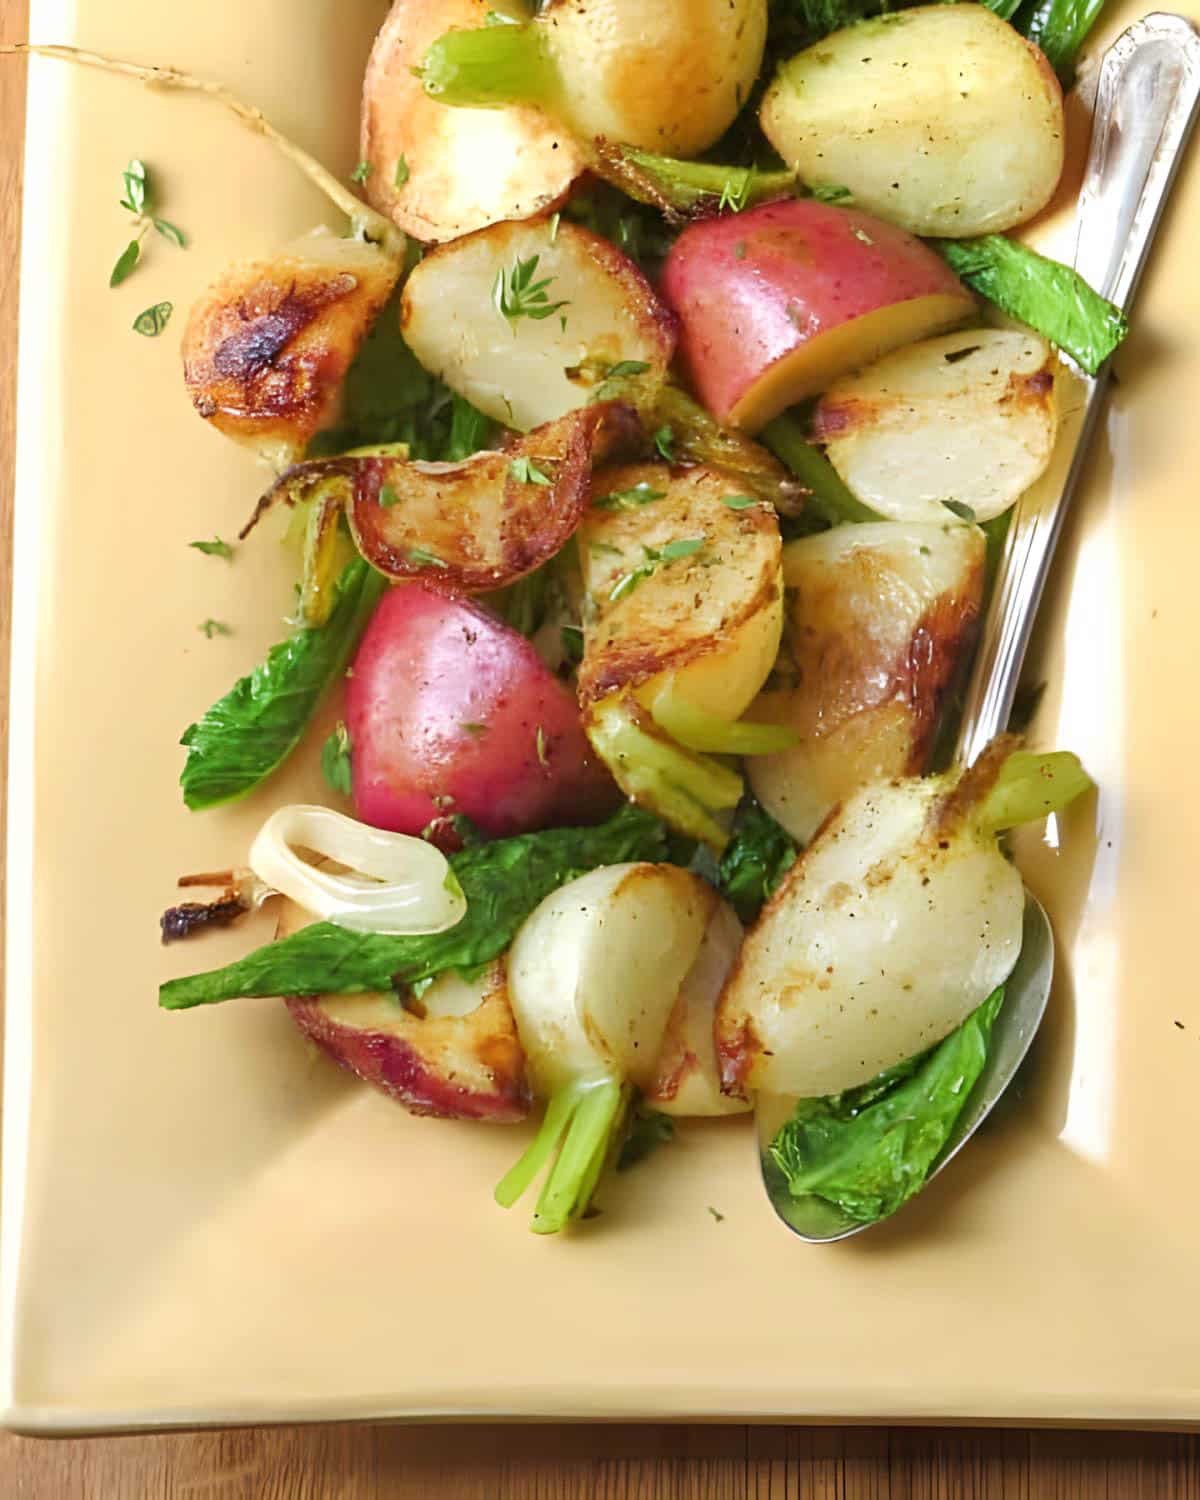 Turnips, potatoes and greens.